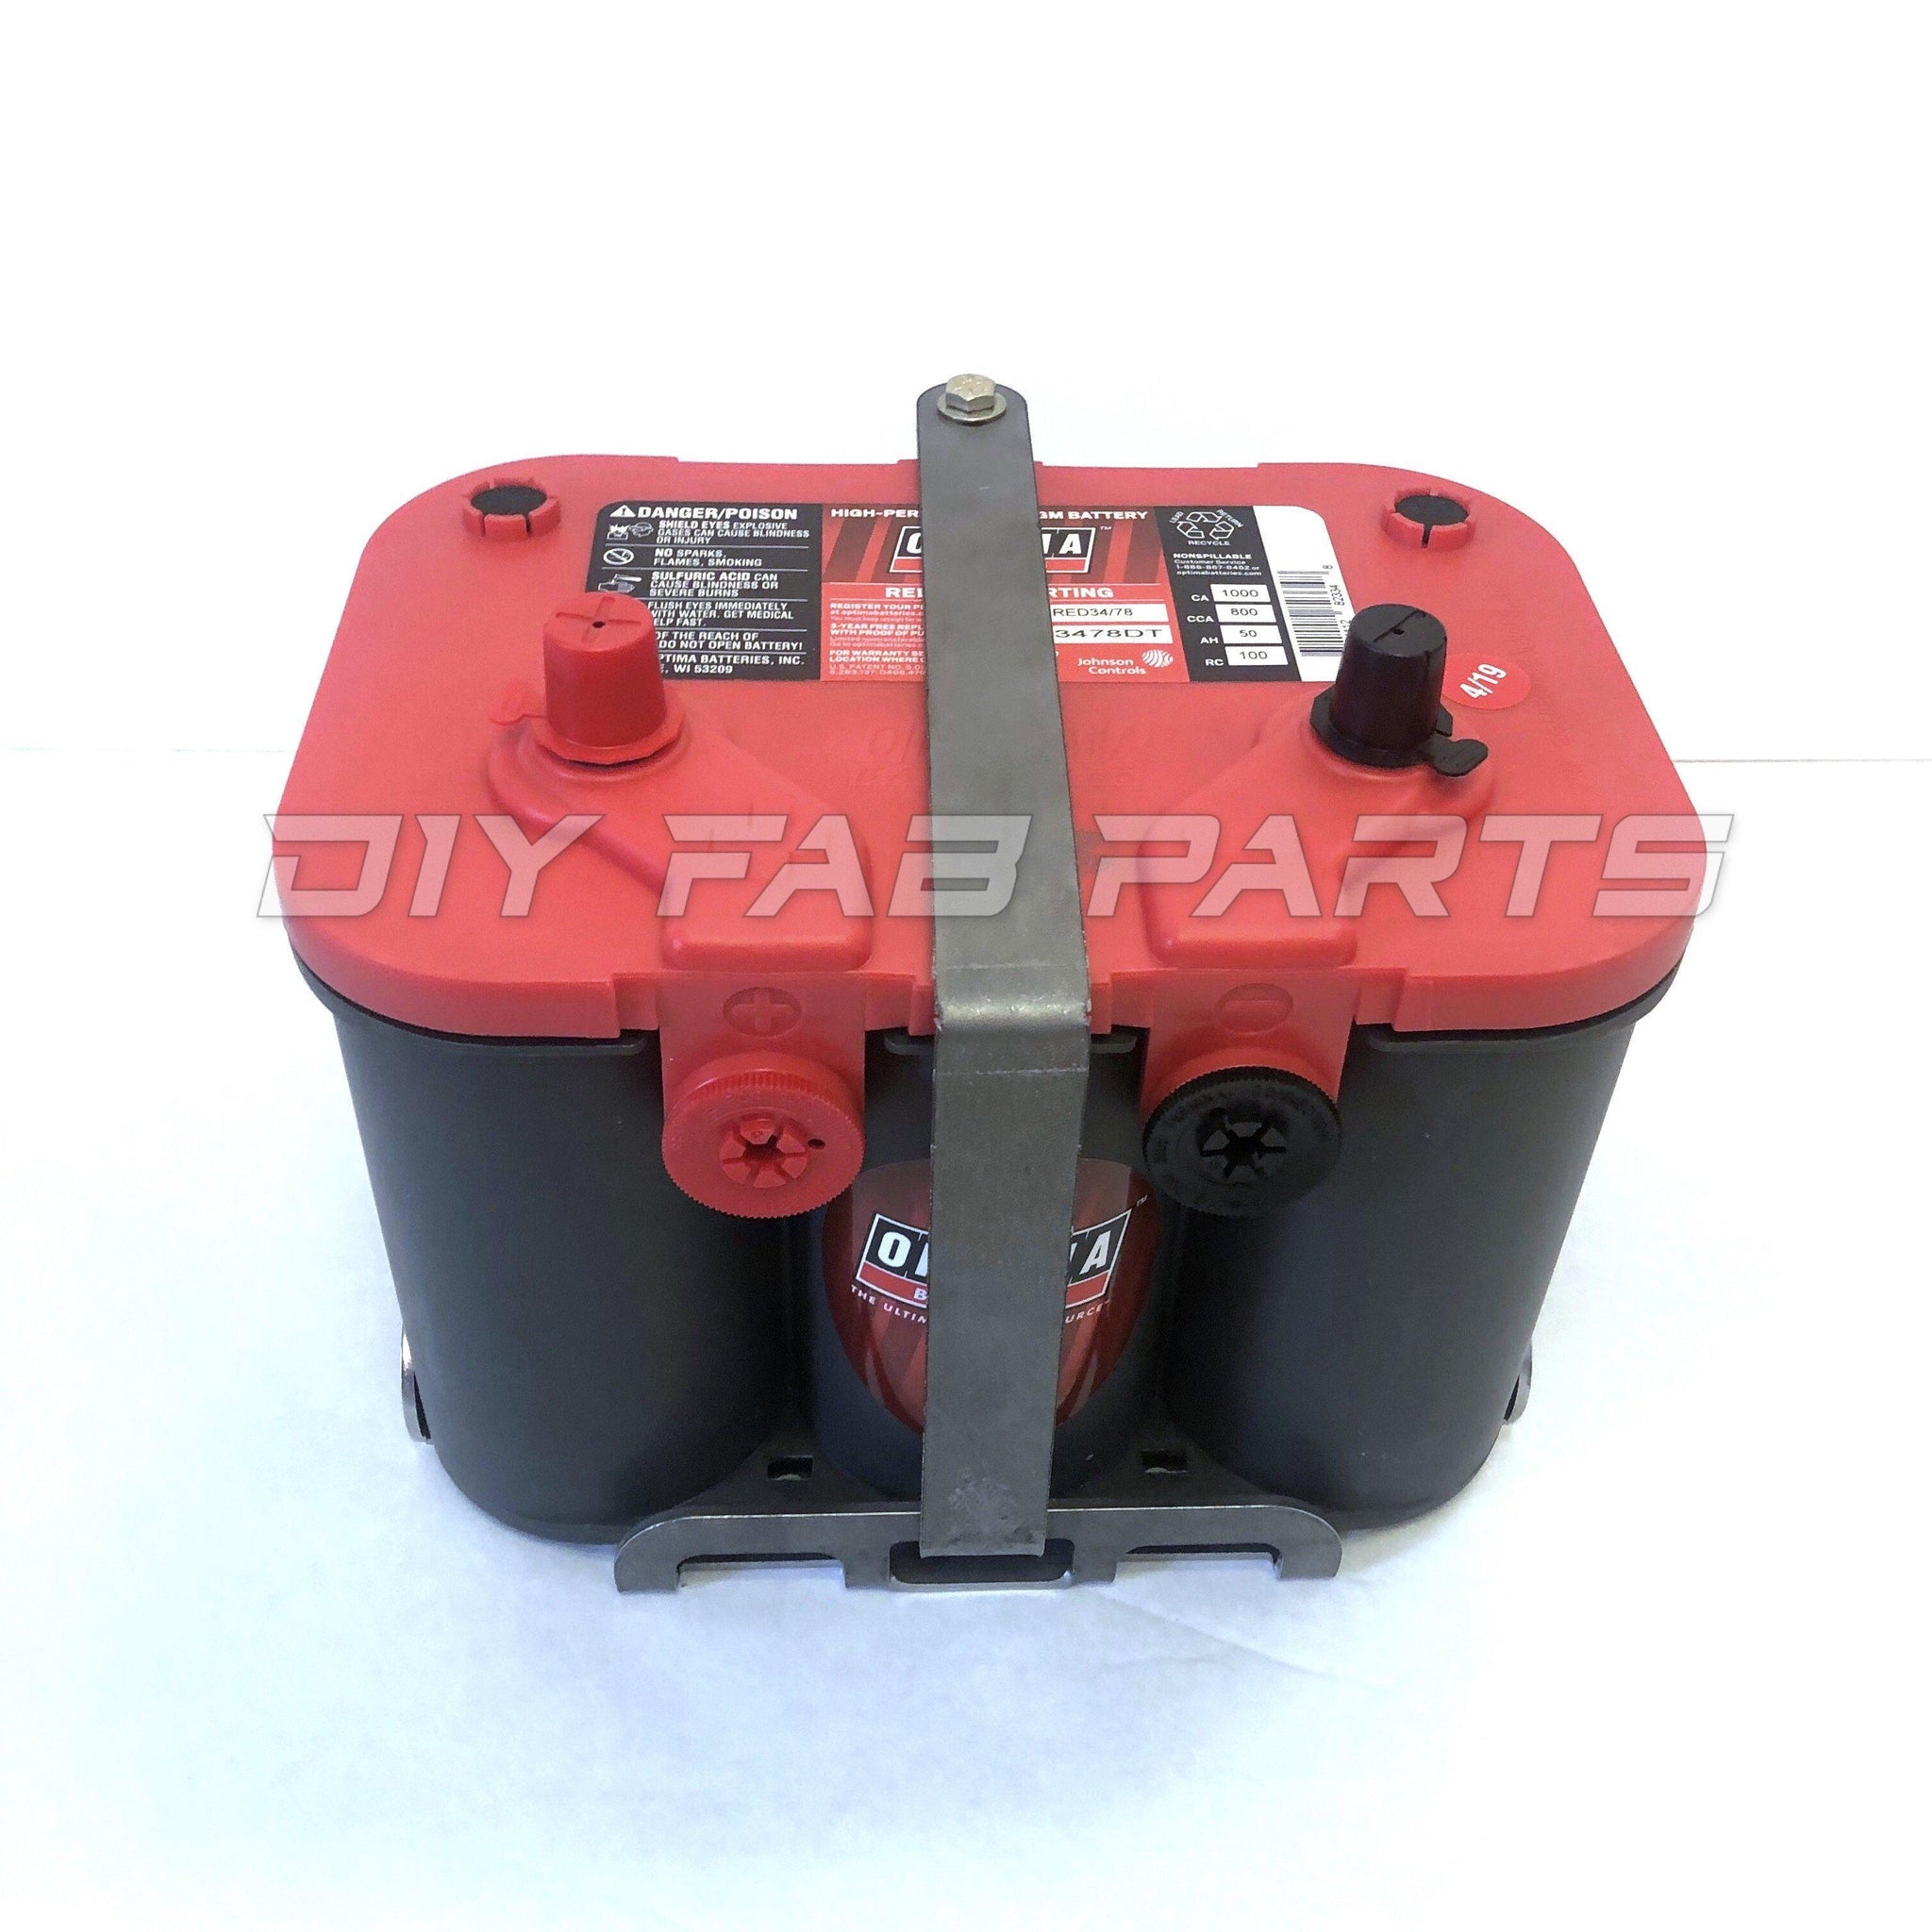 Optima Battery box freeshipping - diyfab 100% money-back guarantee shop now  – DIY FAB